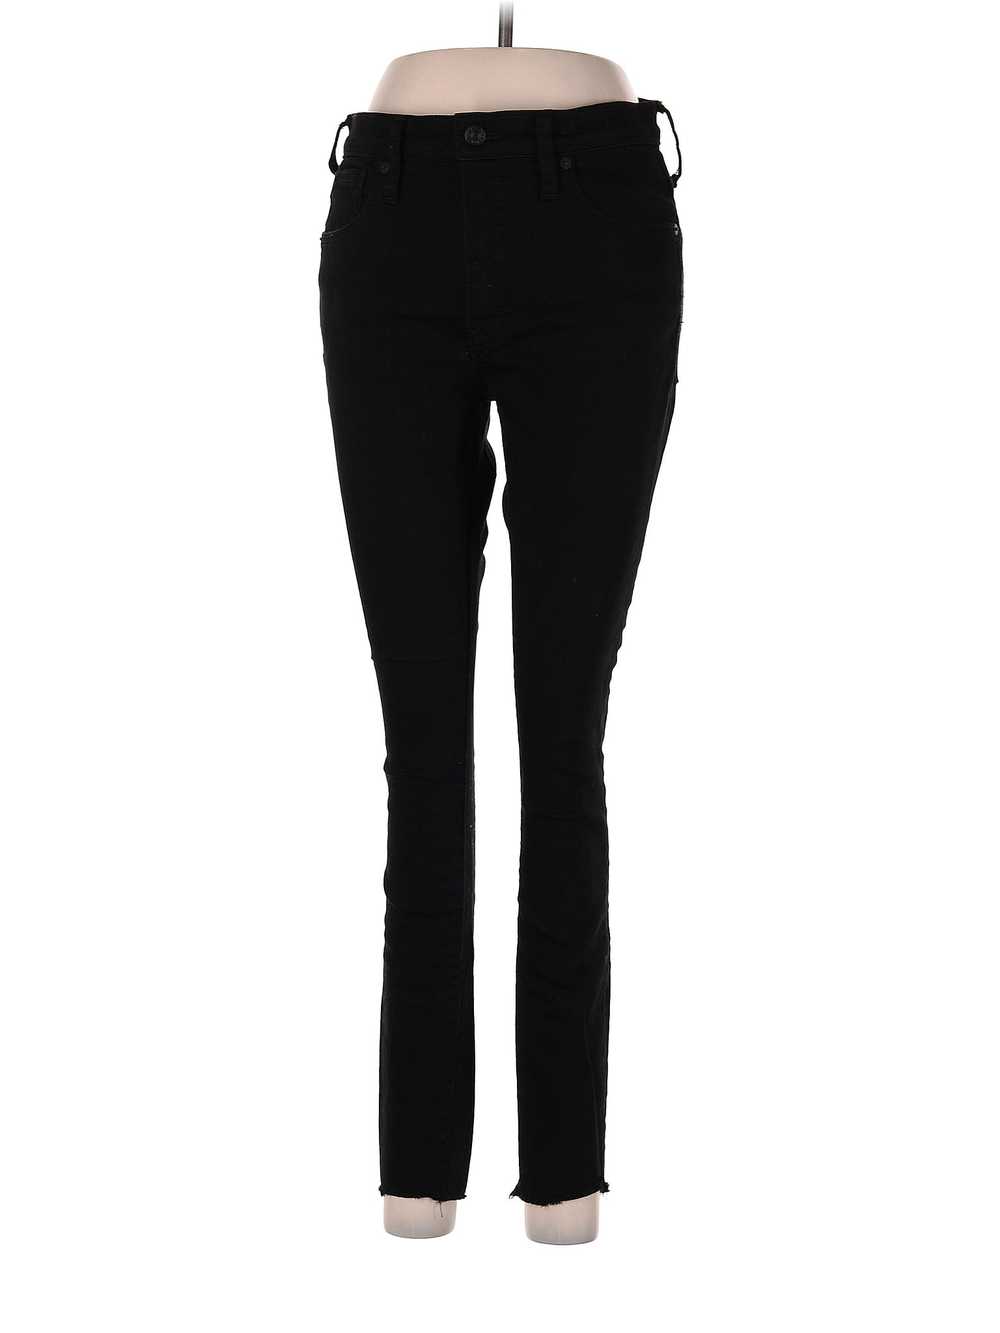 Madewell Women Black Jeans 28W - image 1